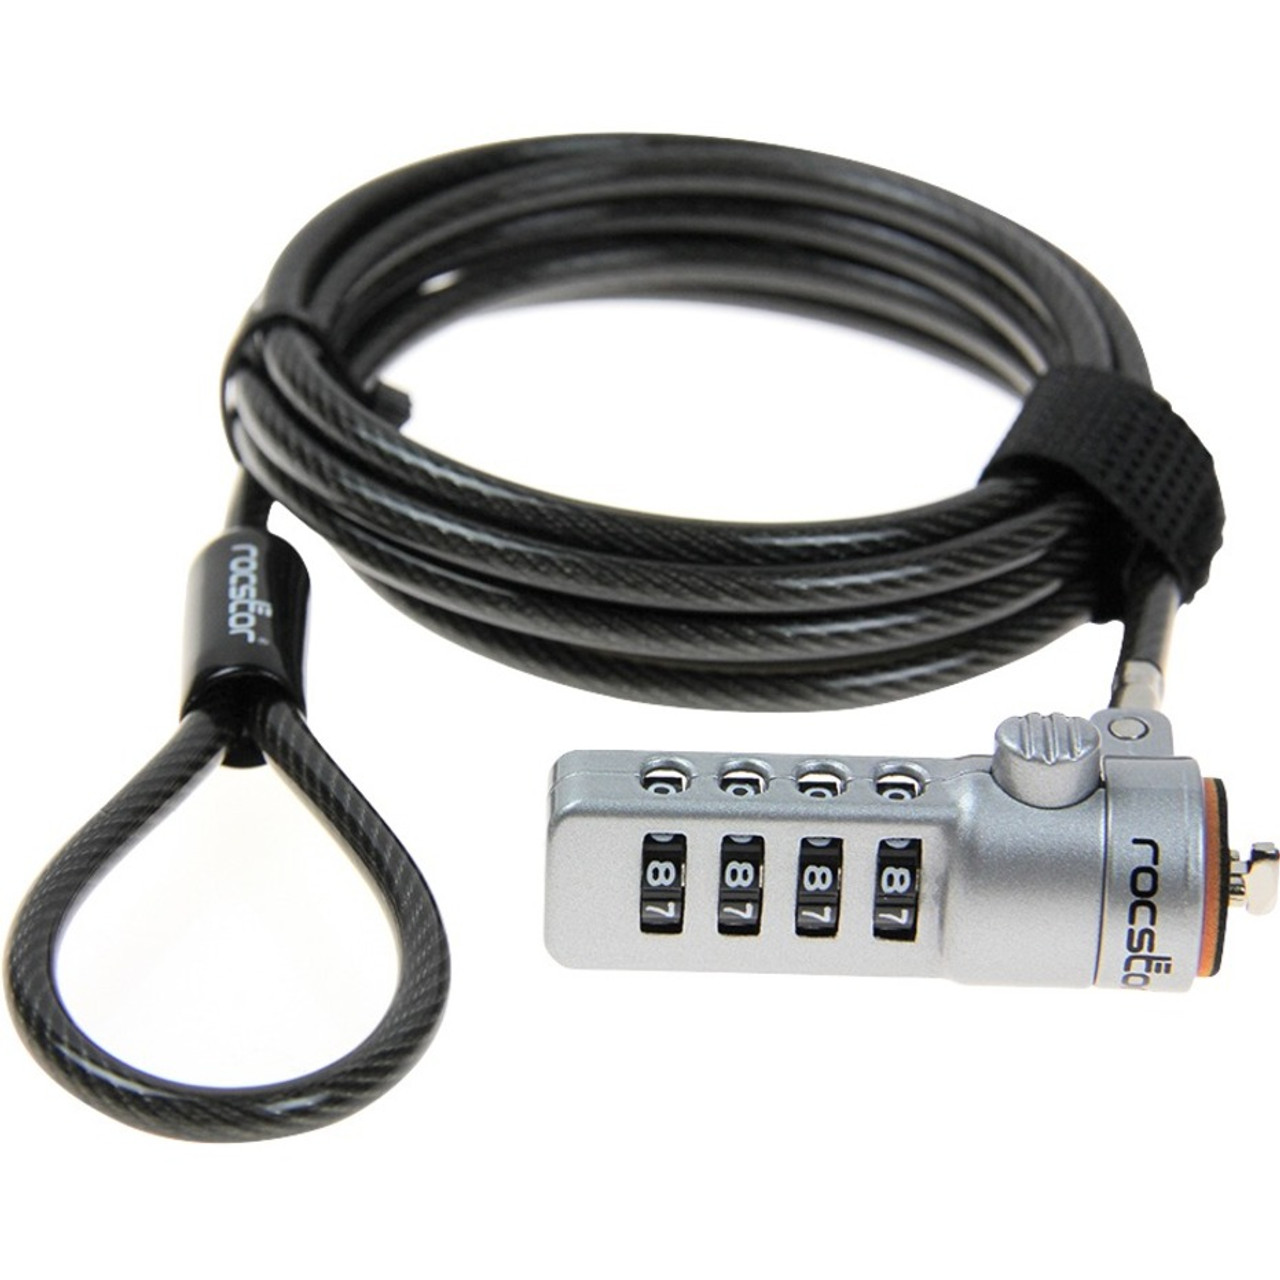 Rocstor Rocbolt Portable Security Cable With Combination Lock - Y10C132-B1